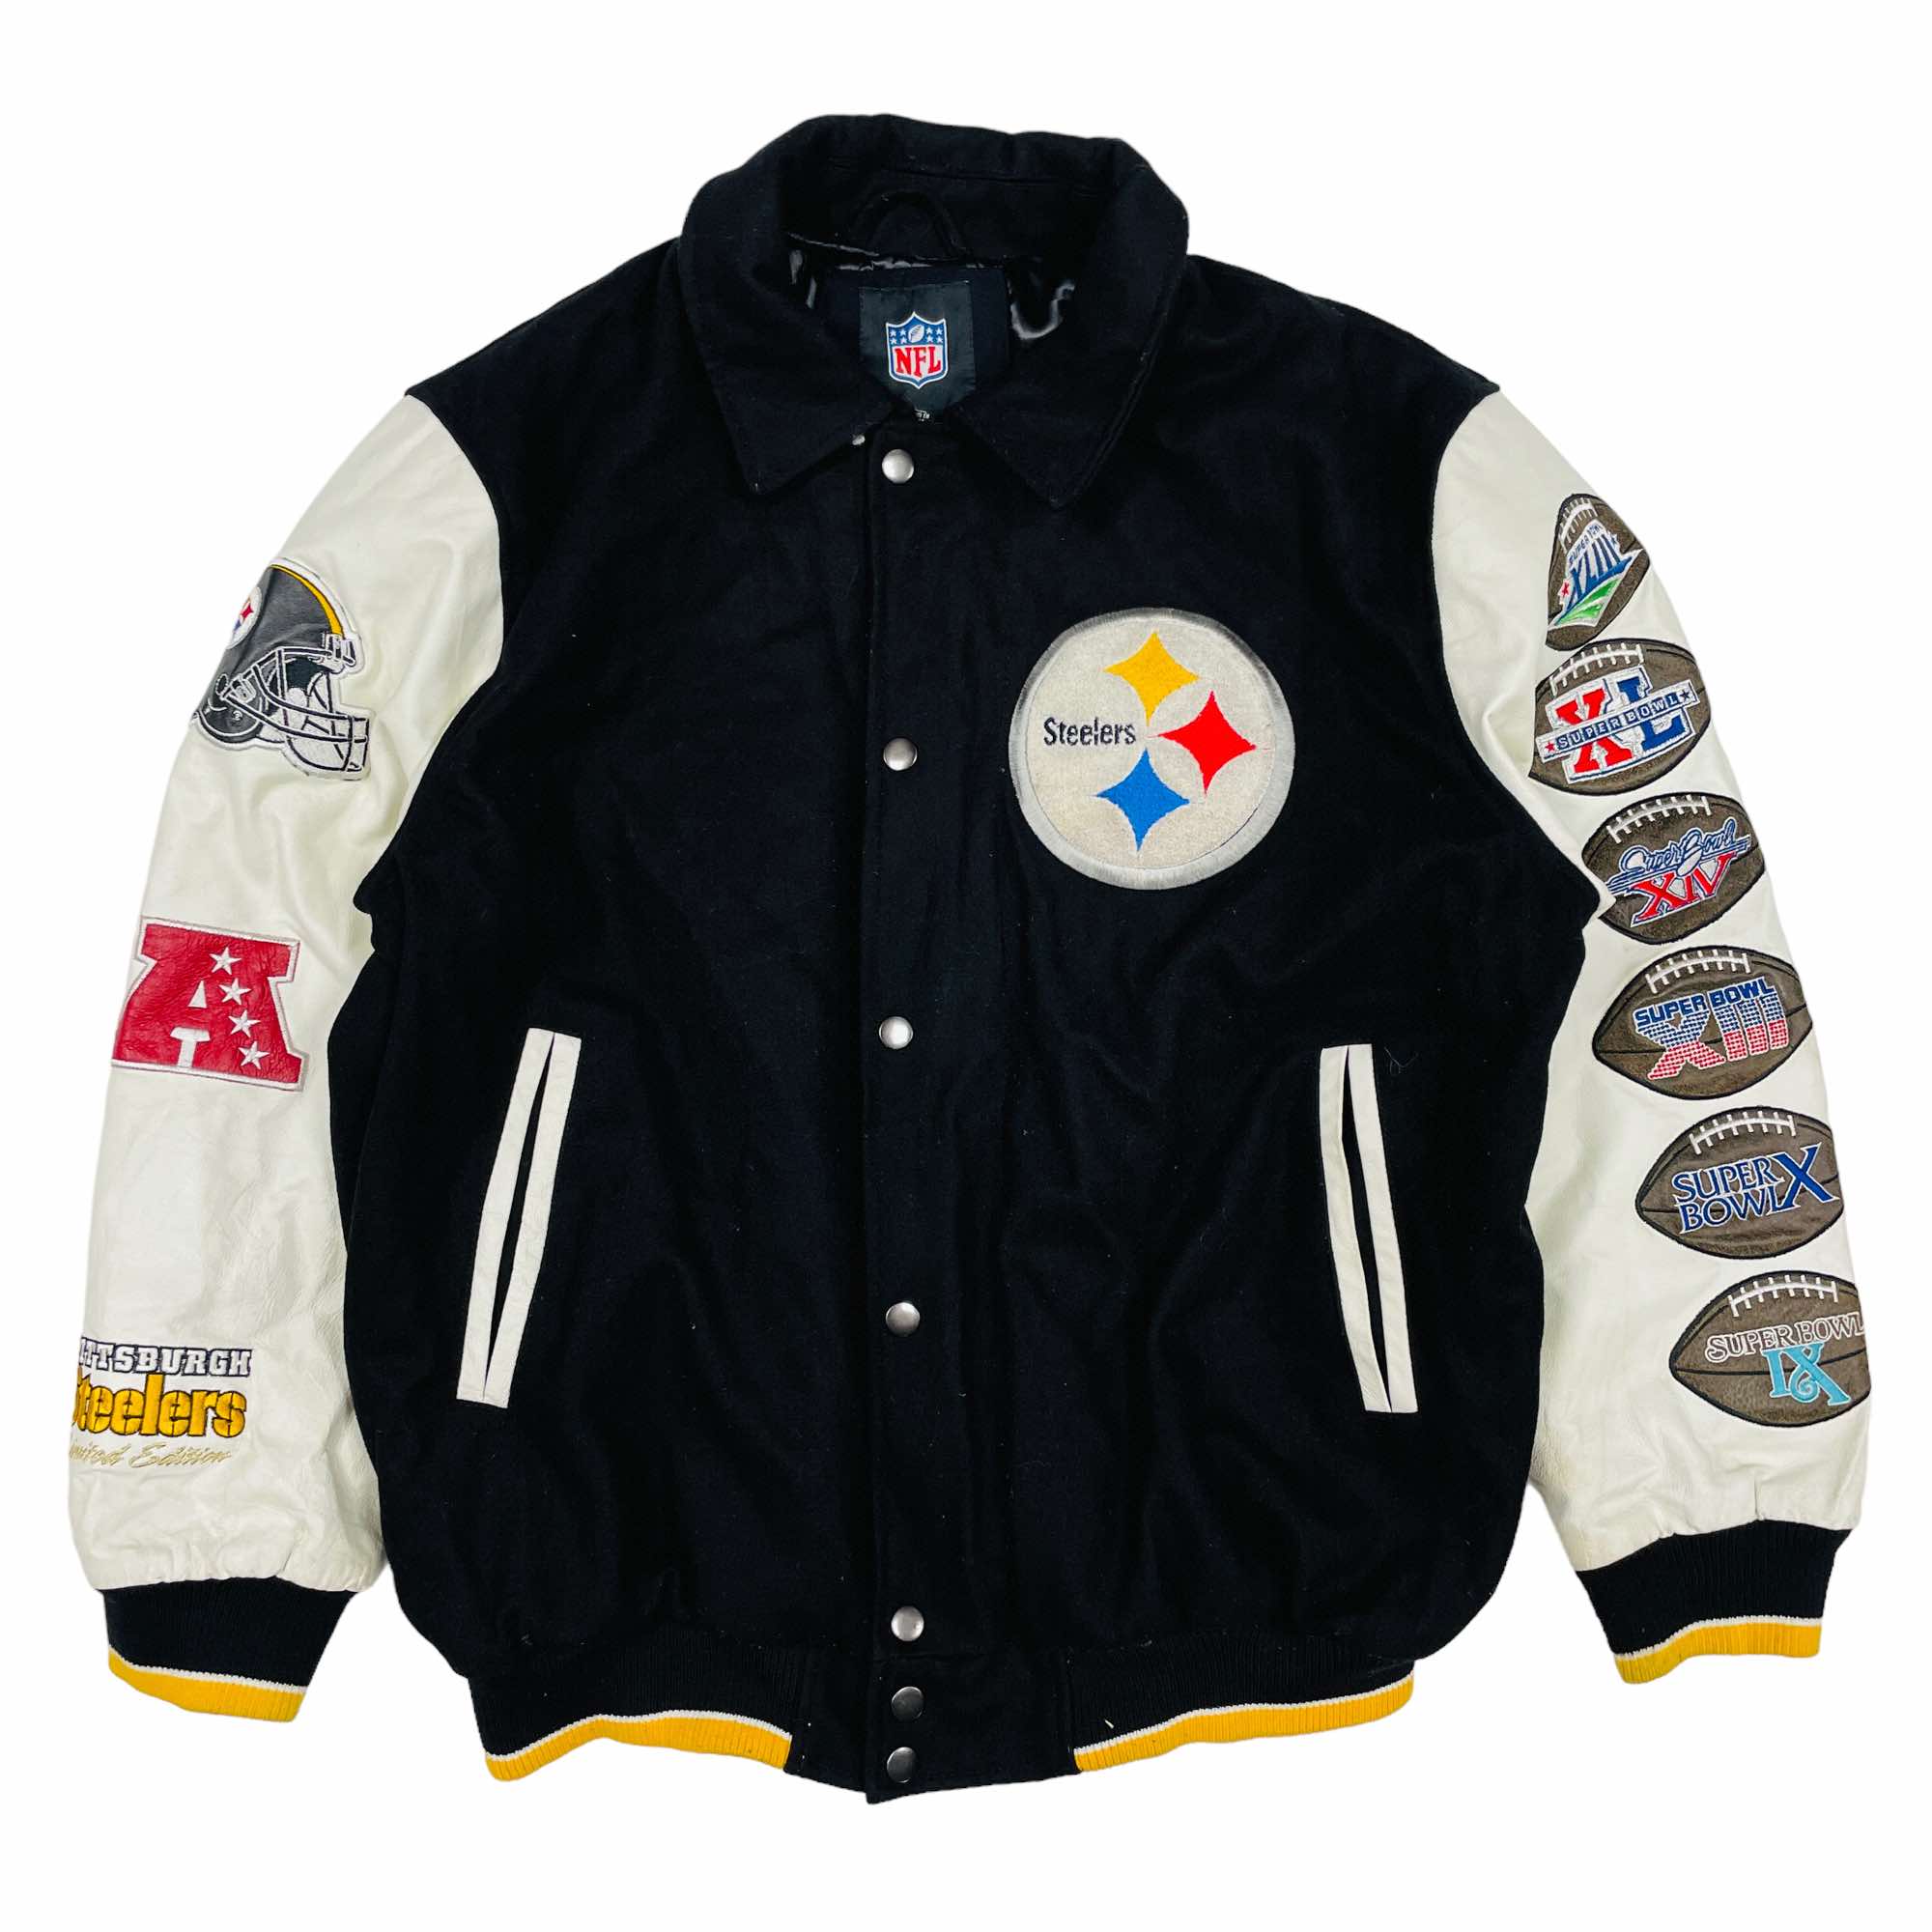 Pittsburgh Steelers NFL Jacket - XL